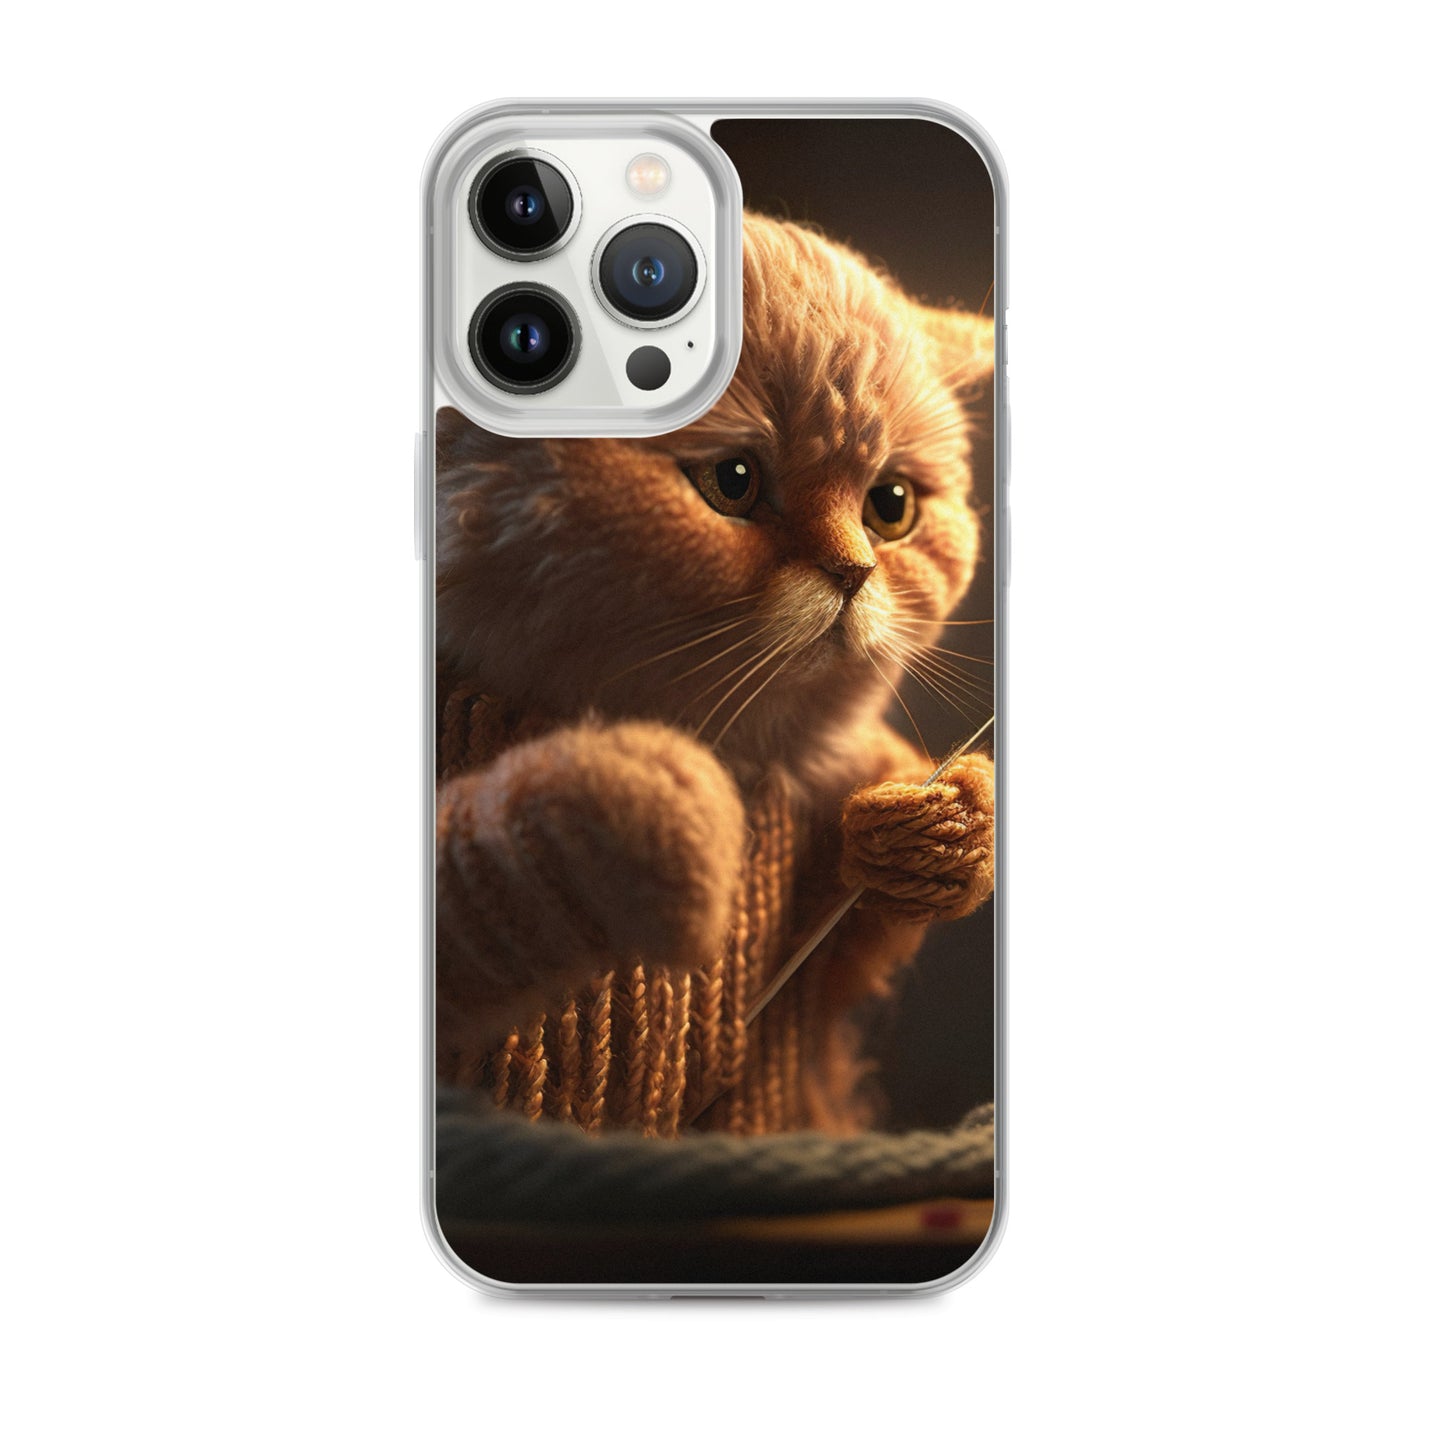 Knit Cat iPhone Case